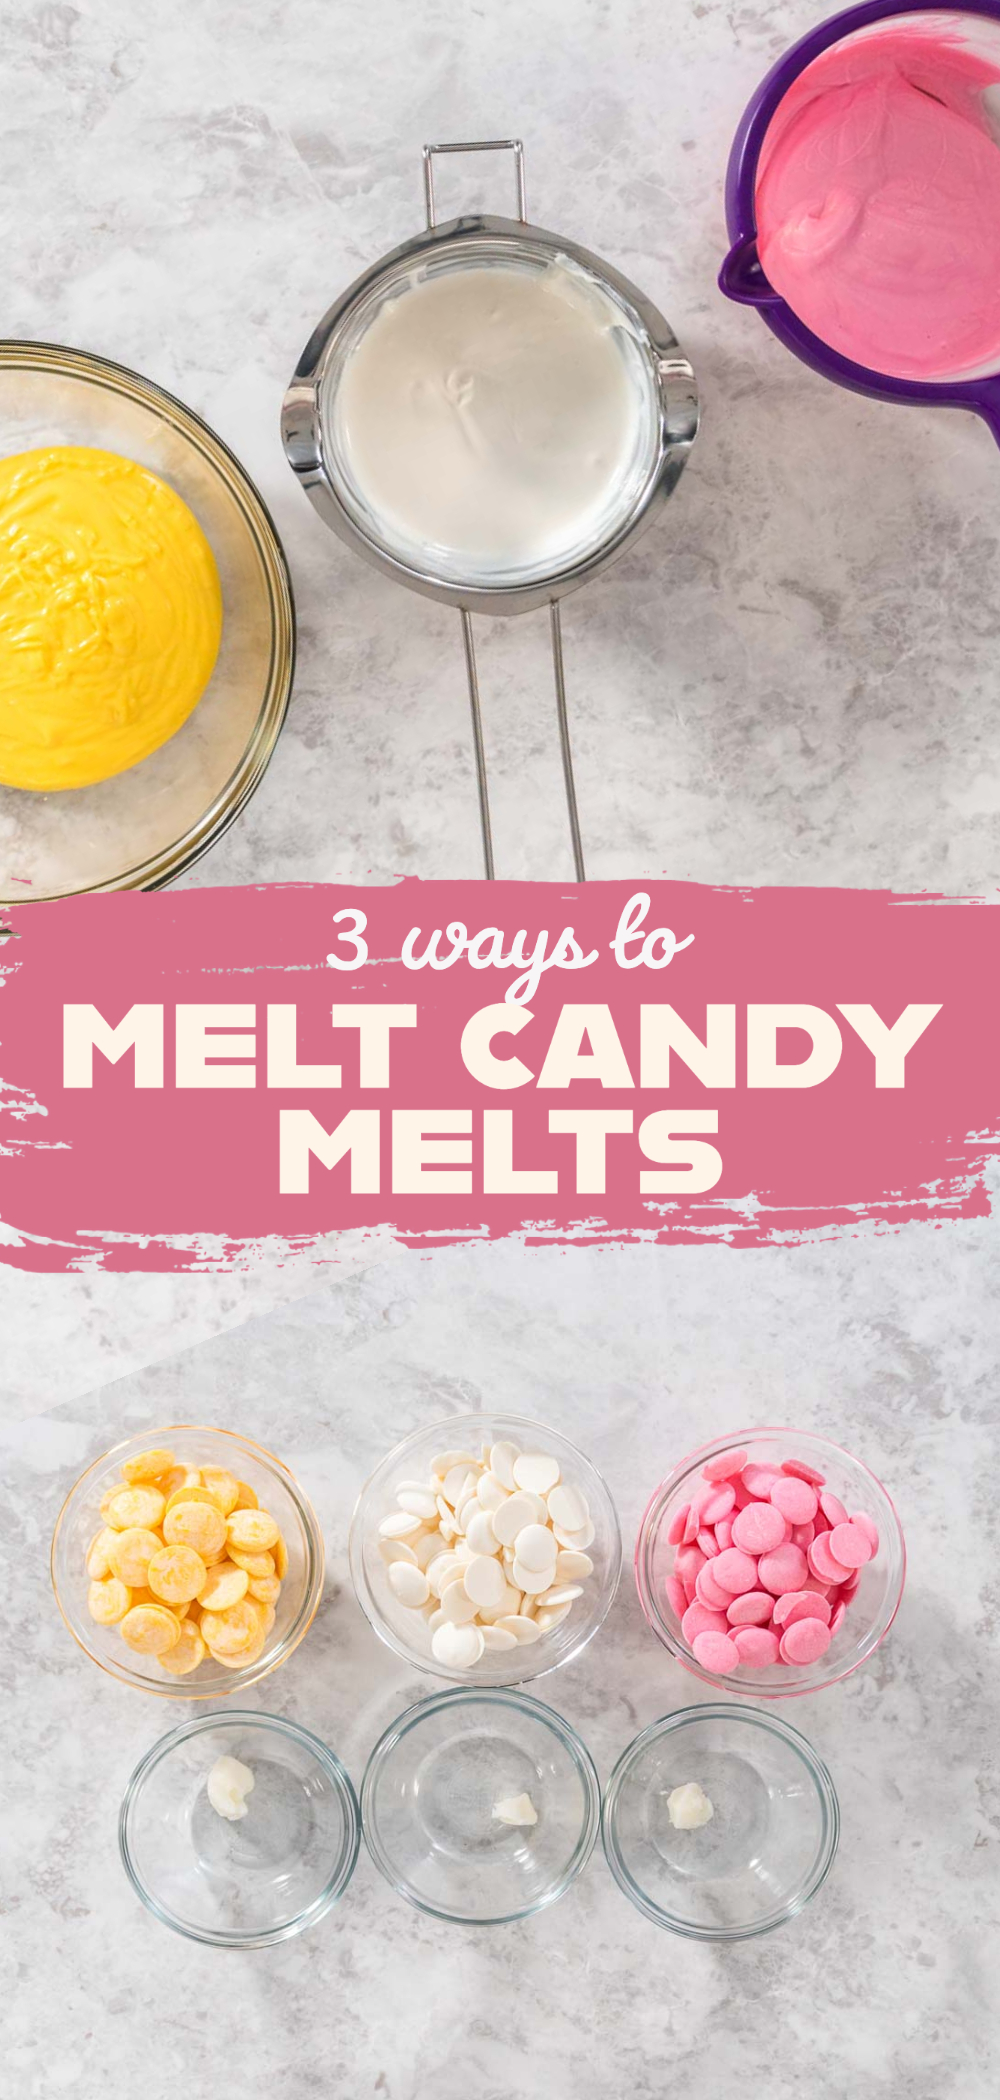 3 ways to melt candy melts